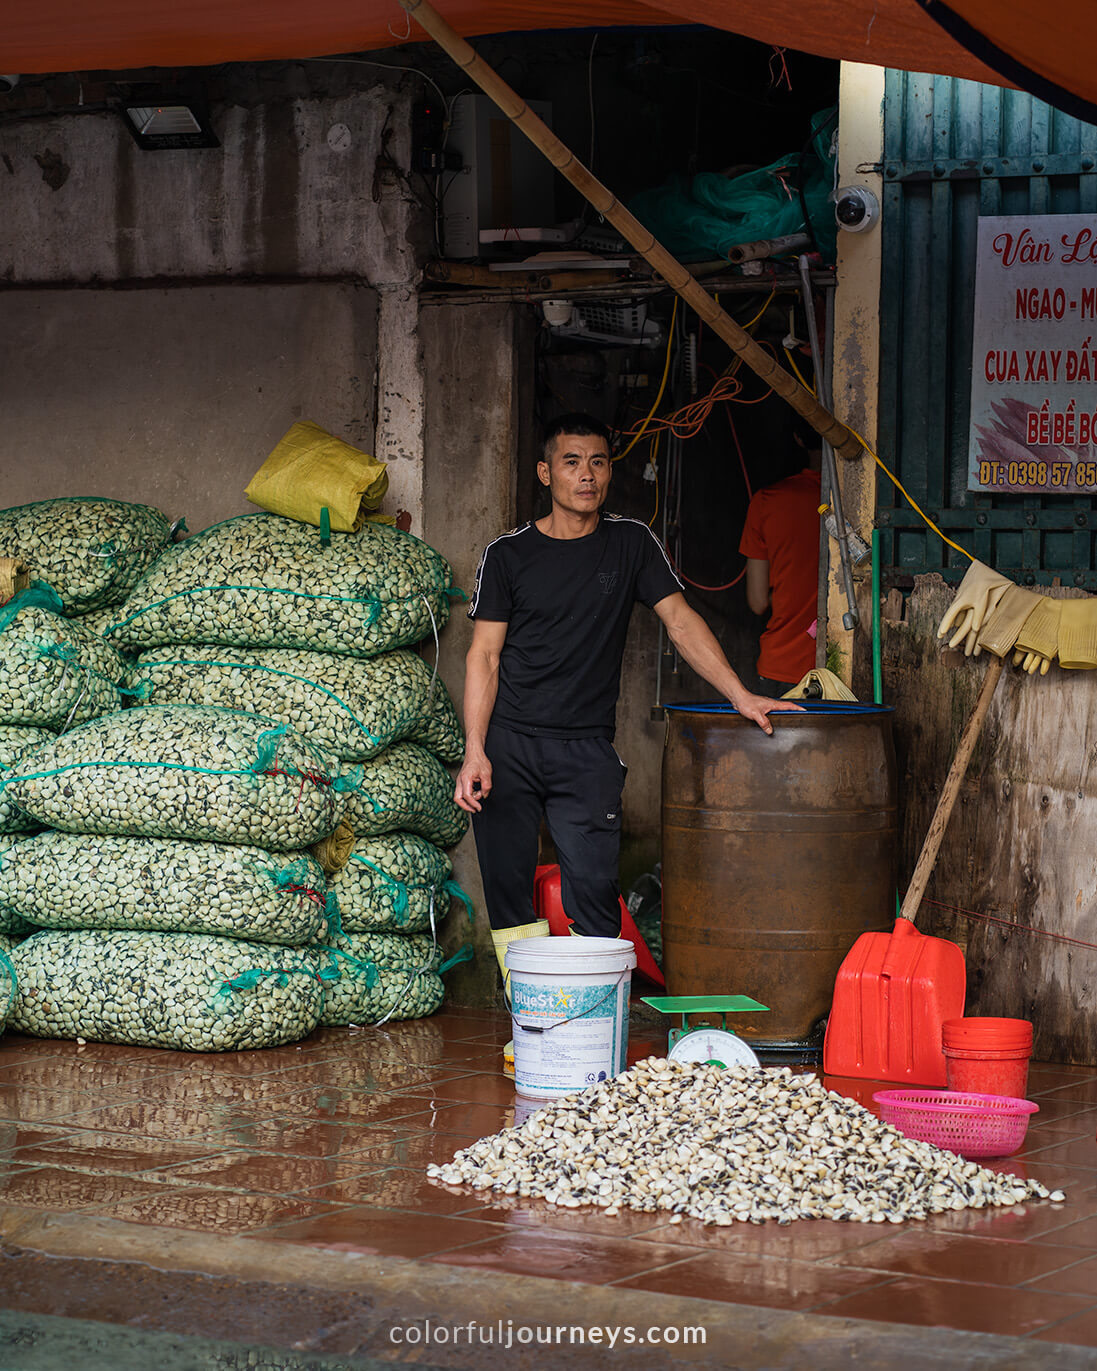 A man sells seafood in Hanoi, Vietnam.